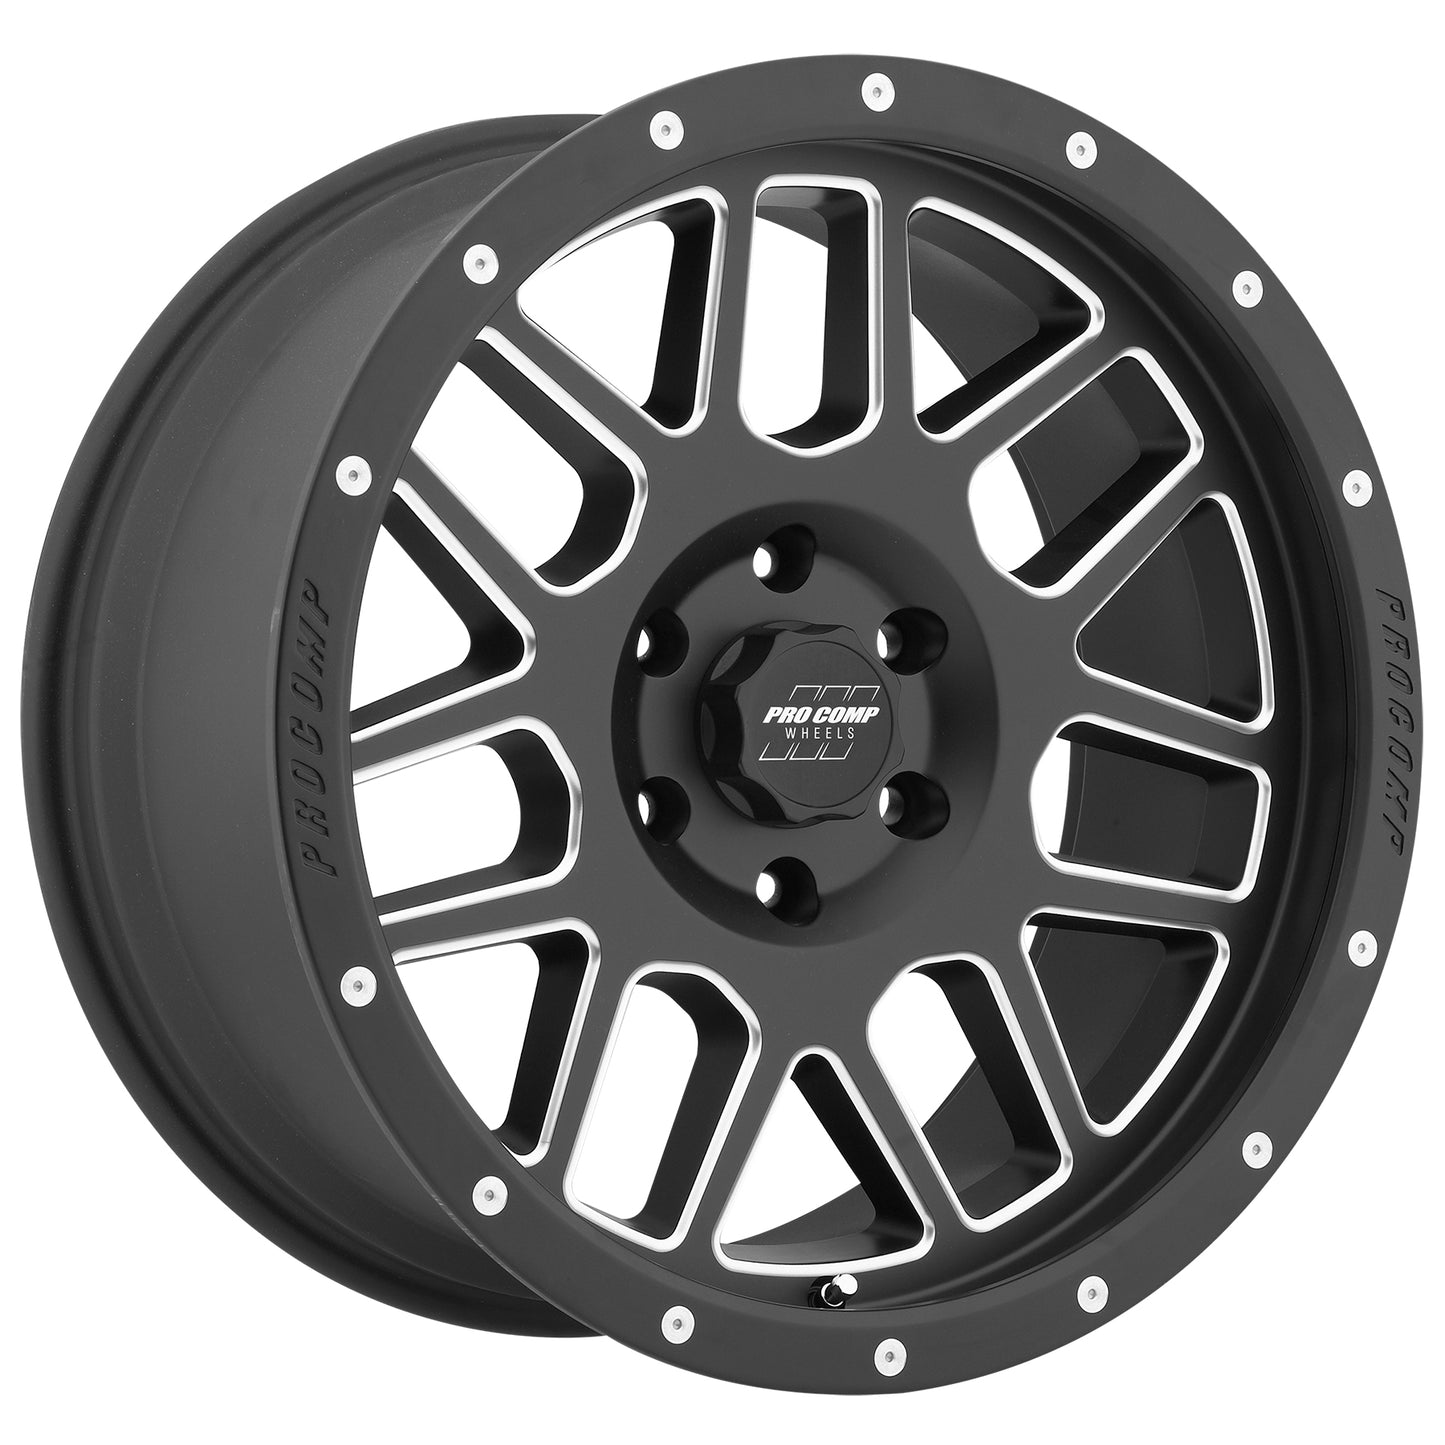 Pro Comp Wheels Vertigo Satin Black Milled 17x9 6x135 4.75BS Offset -6mm Cap P/N 5040556000 5140-7936